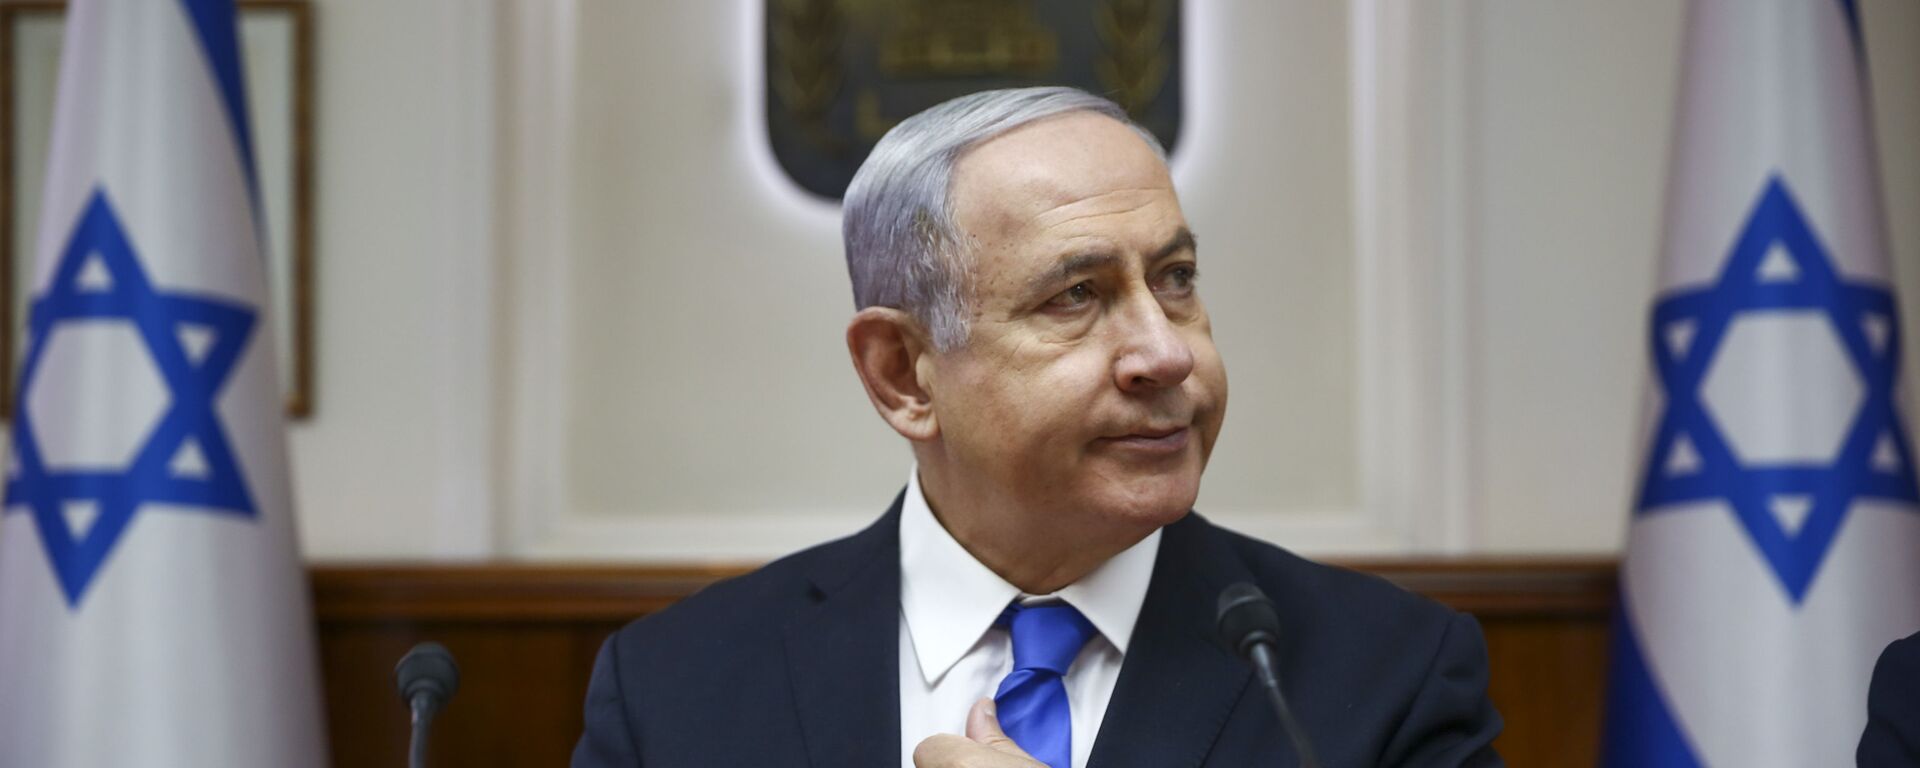 El primer ministro israelí, Benjamín Netanyahu - Sputnik Mundo, 1920, 24.03.2021